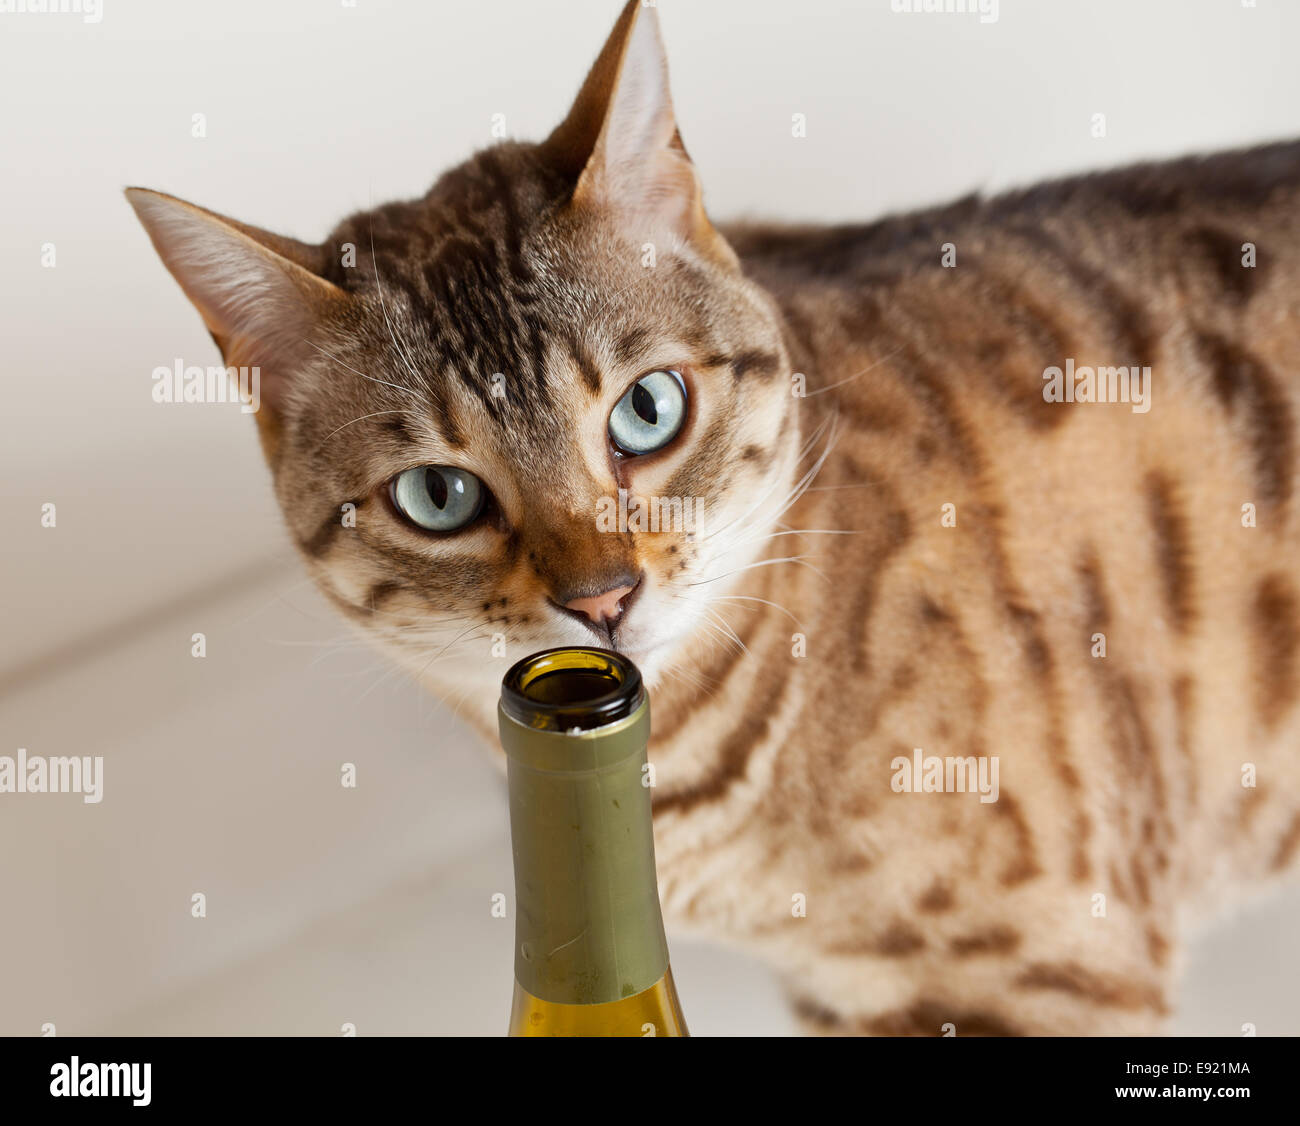 Cute kitten sniffing wine bottle Stock Photo